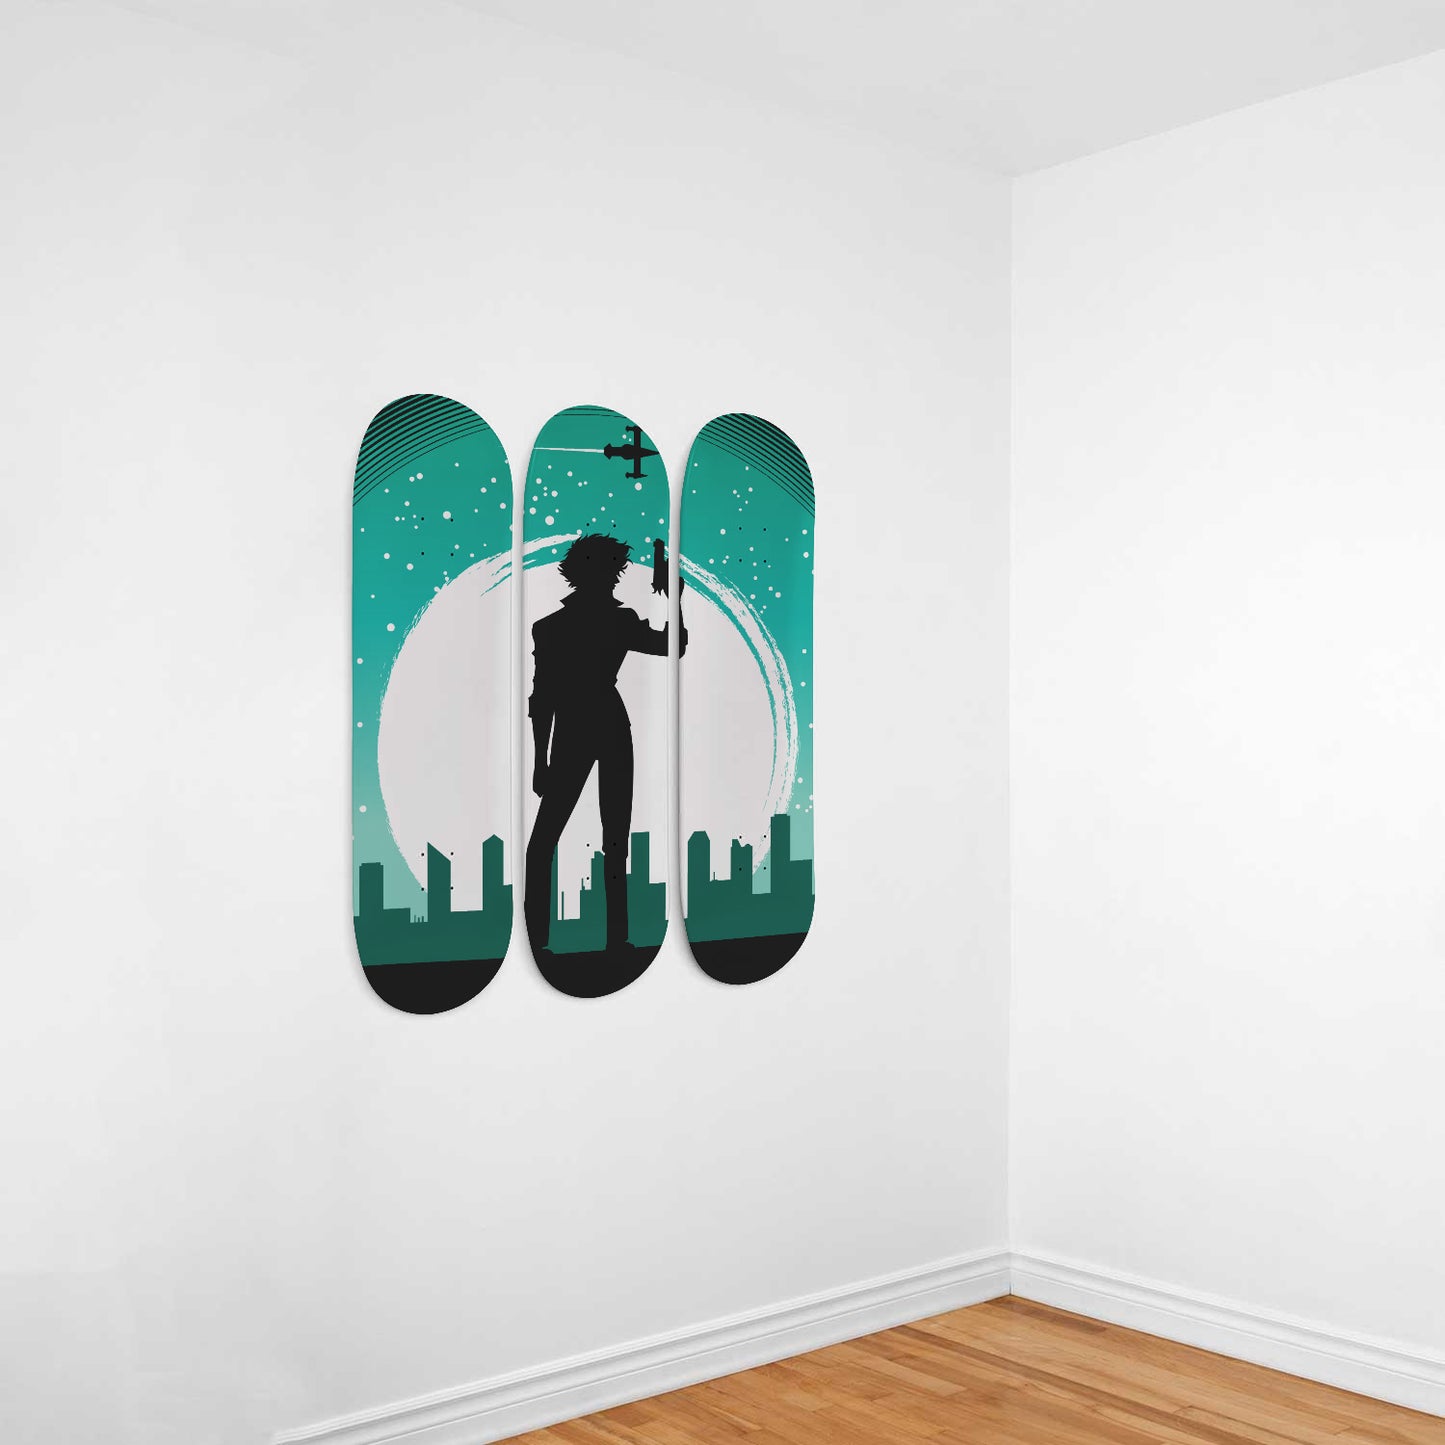 Spike Spiegel In The City  | Wall Art -Cowboy Bebop Inspired | Japanese Neo Noir Science Fiction Anime Inspired | 3 Piece Skateboard Wall Art, Deck Art | Wall Hanging Decor | Custom Painted Wall Art